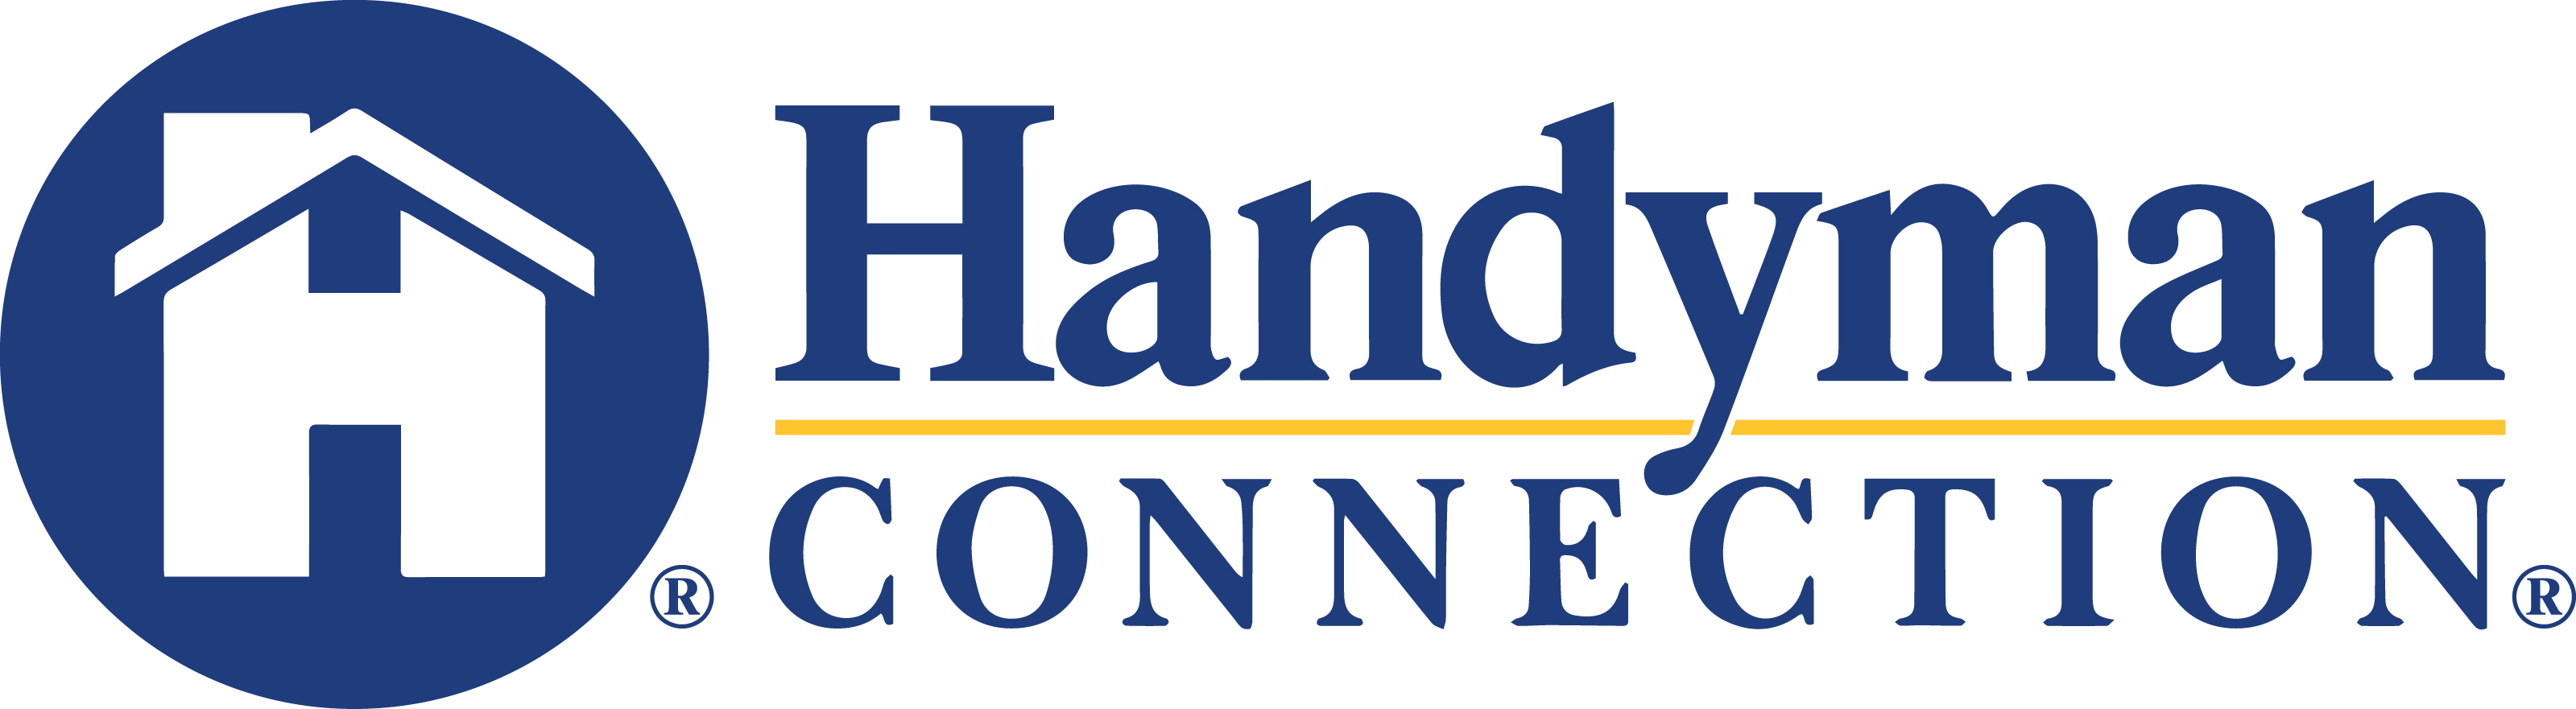 https://handymanconnection.com/wichita-east/wp-content/uploads/sites/55/2021/06/HandymanConnection-logo-2-1.png